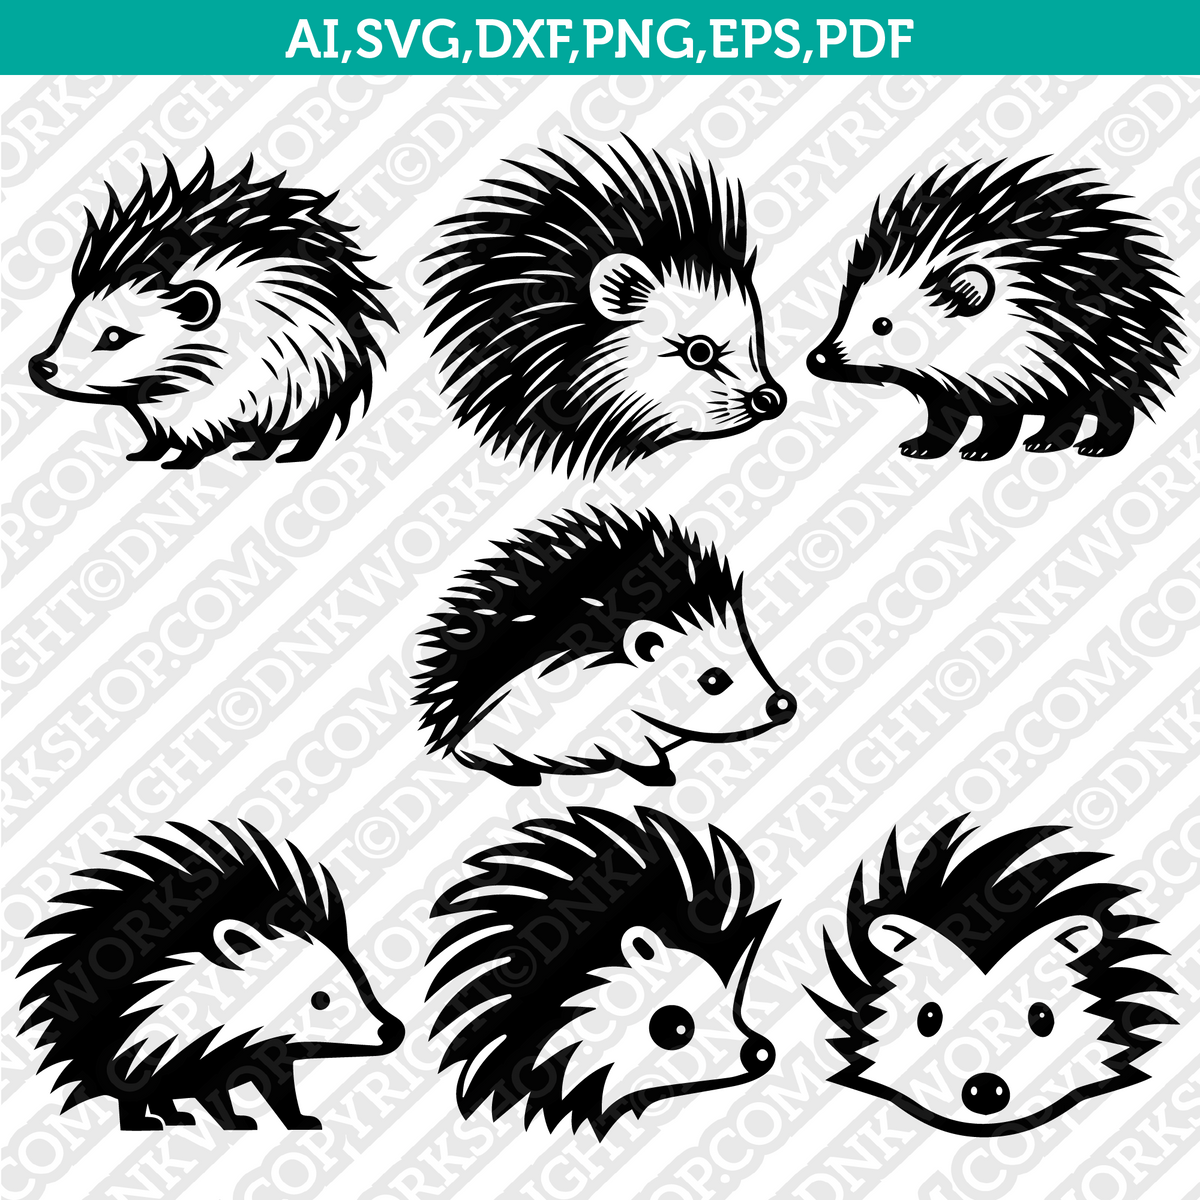 Lookin' Sharp Porcupine Teacher Student Clipart Digital Download SVG PNG  JPG PDF Cut Files